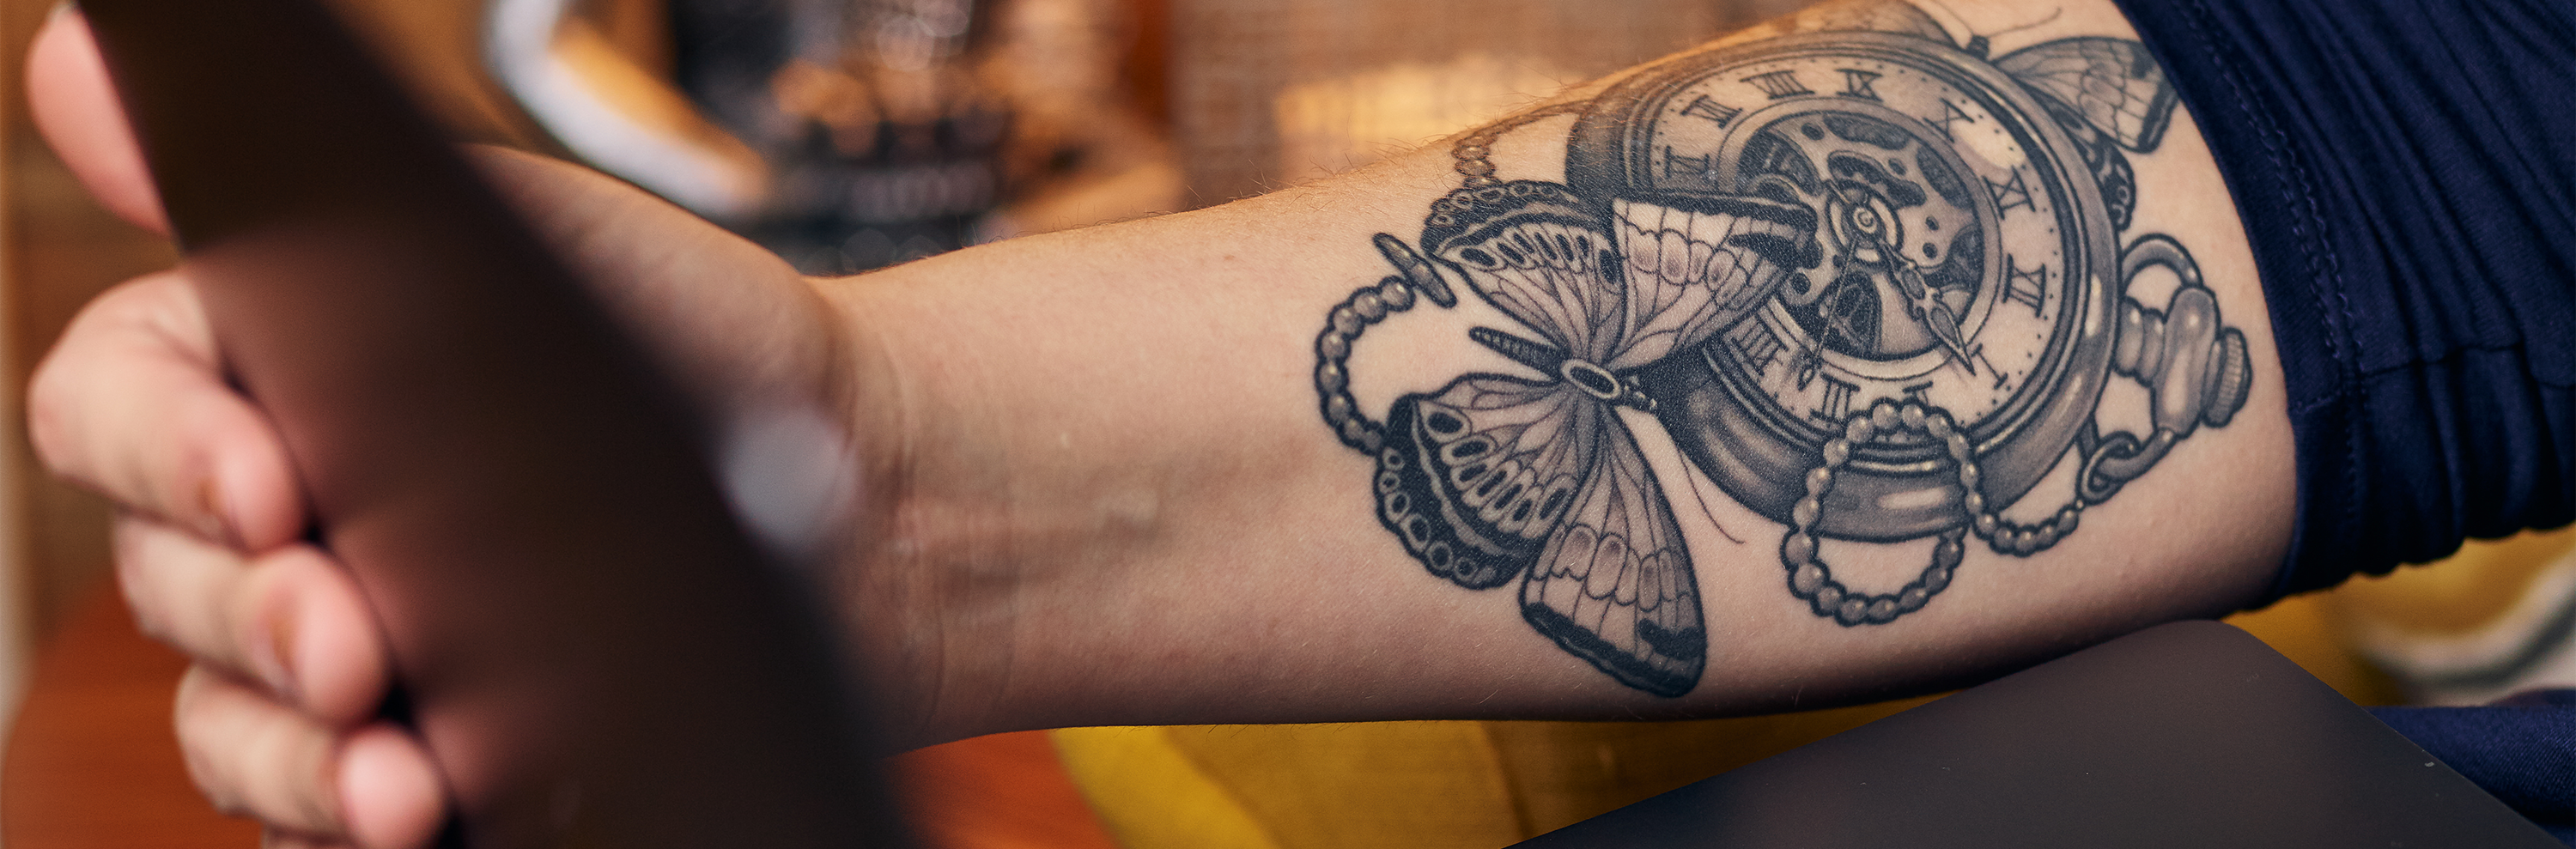 Creative agency - Clockwork tattoo on arm